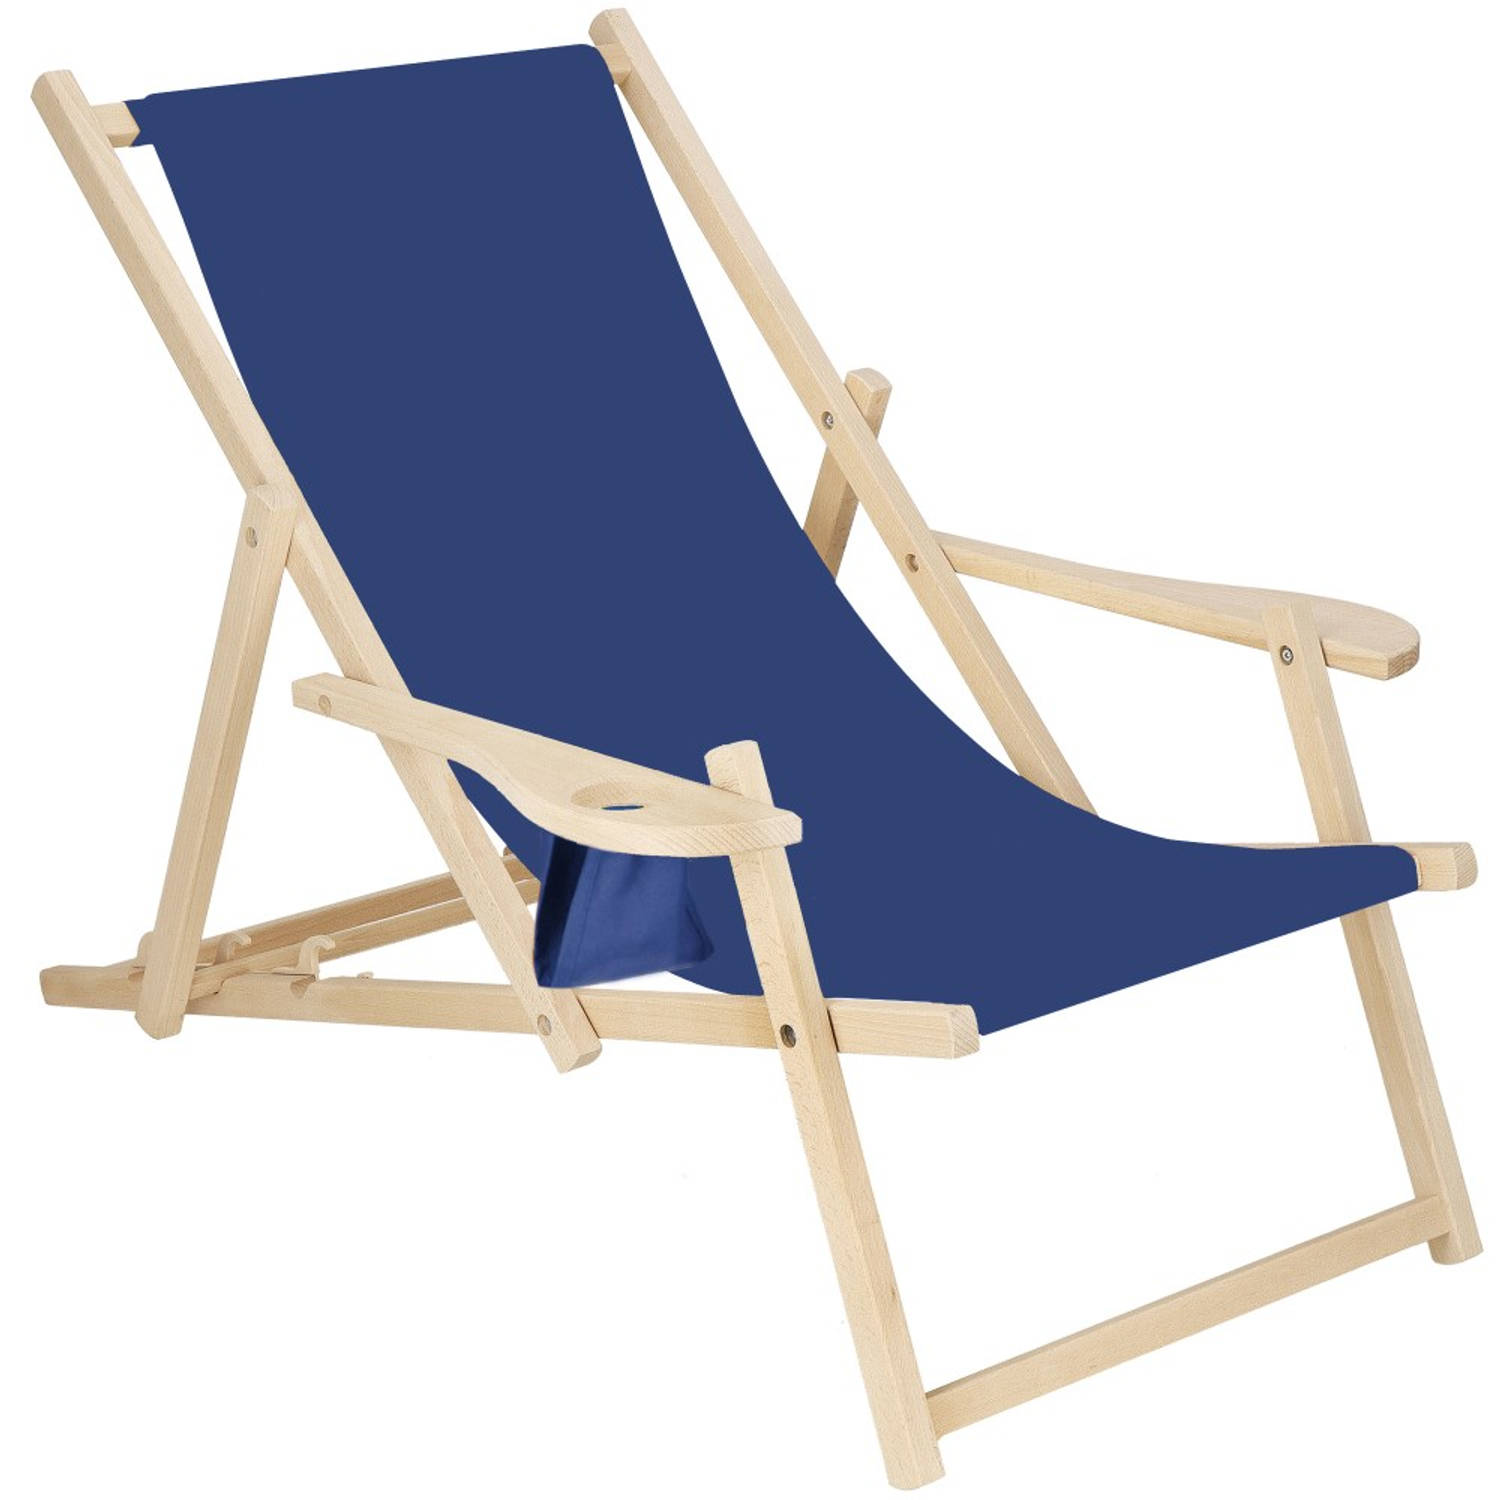 Ligbed Strandstoel Ligstoel Verstelbaar Armleuningen Beukenhout Handgemaakt Marineblauw